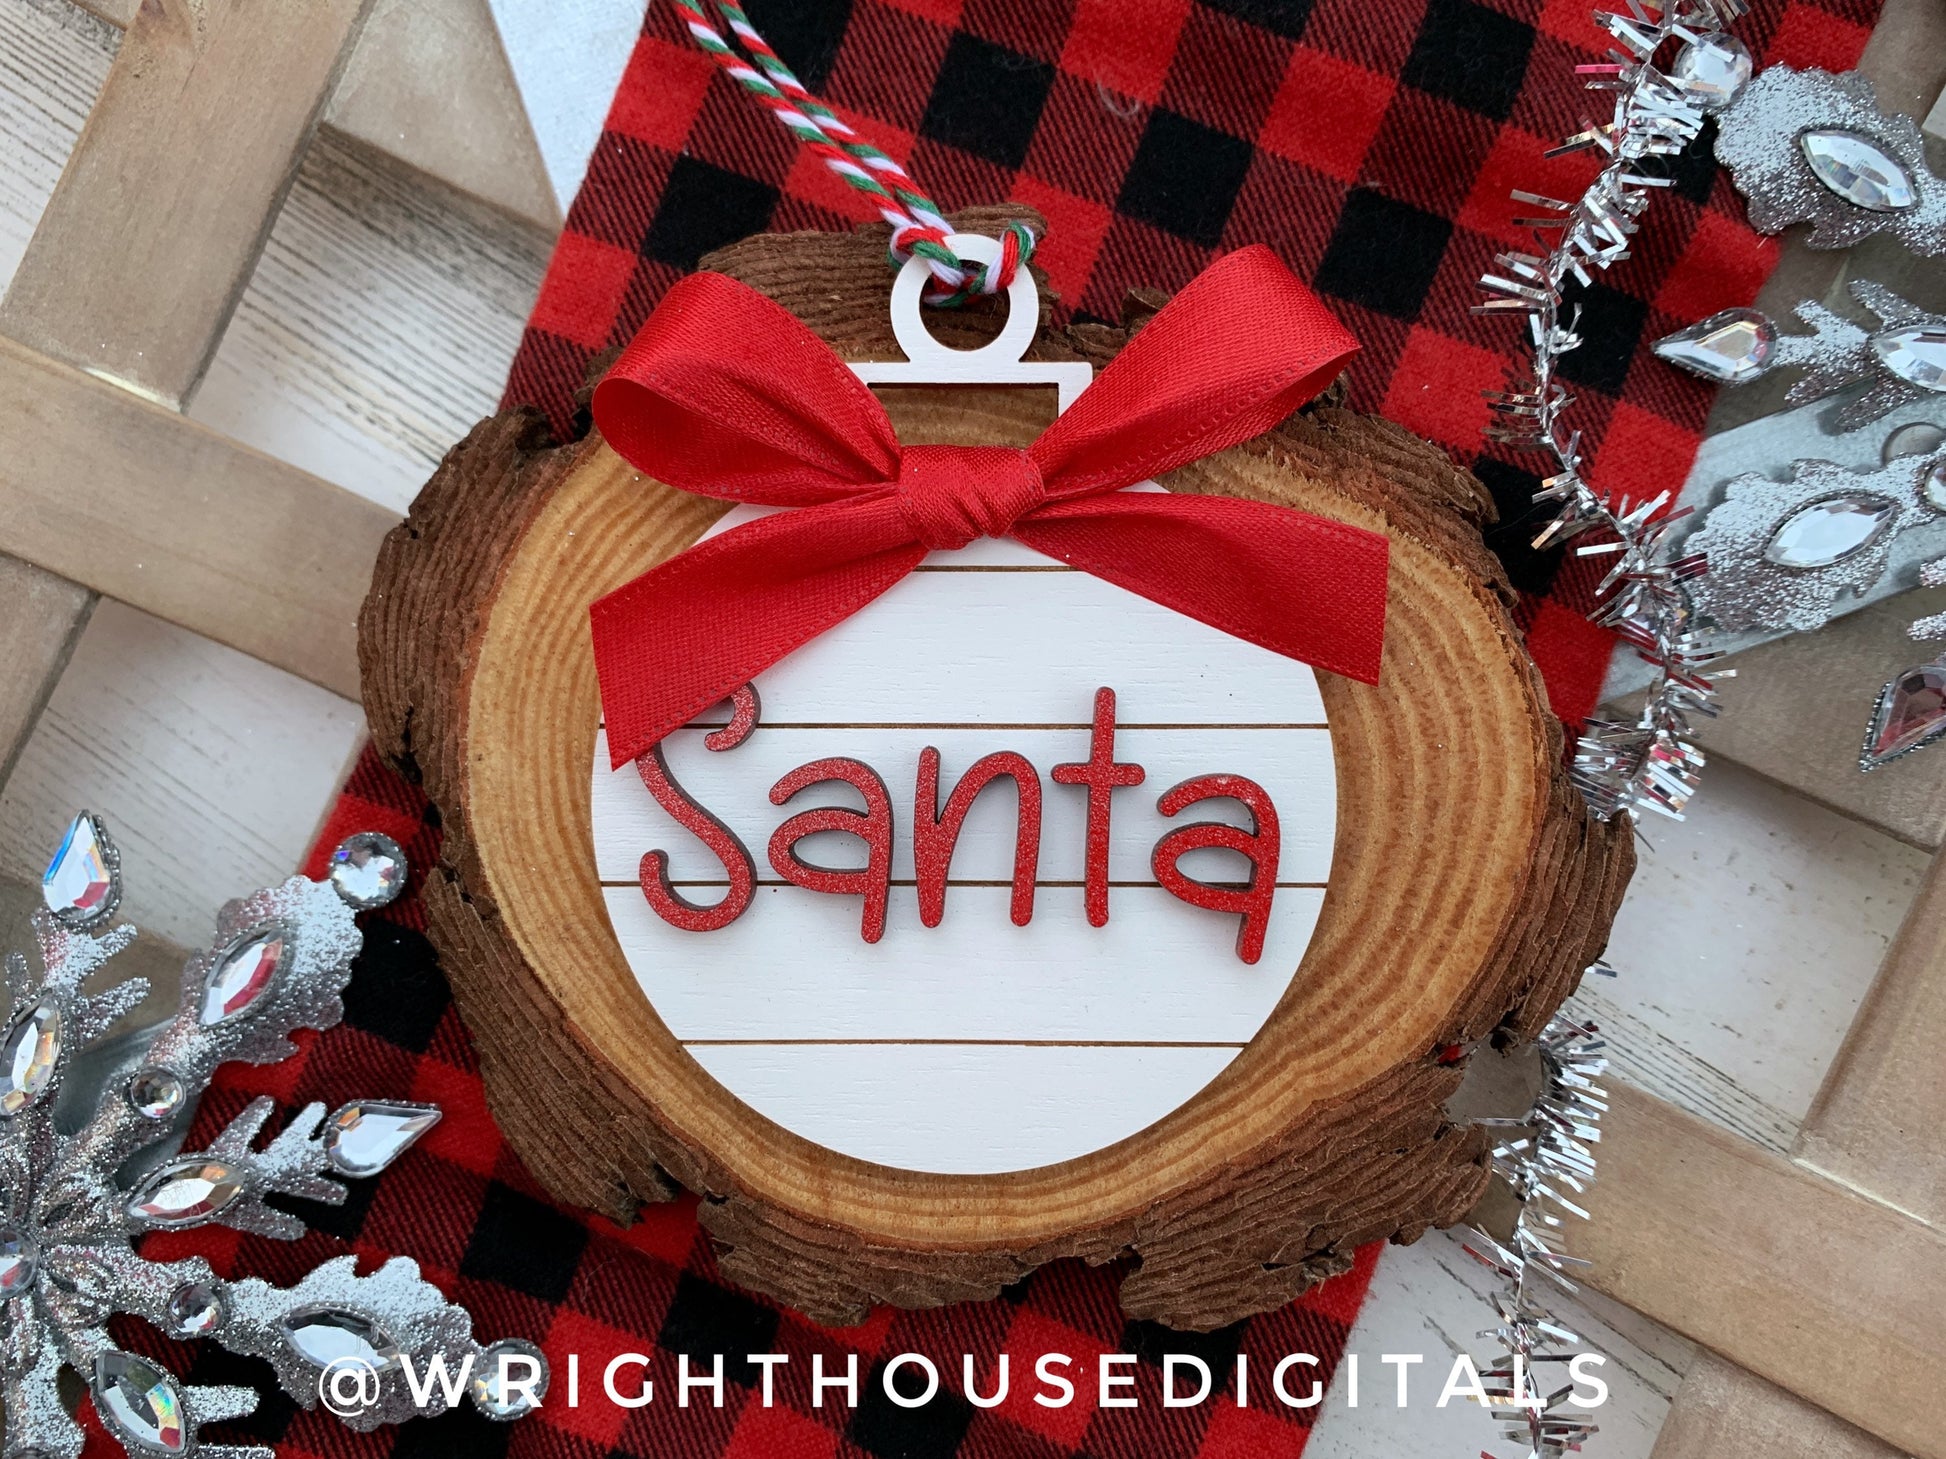 Santa Claus Shiplap Christmas Tree Ball Ornament Set - Believe HoHoHo Naughty Nice - Quick Cut File For Glowforge Lasers - Digital SVG File